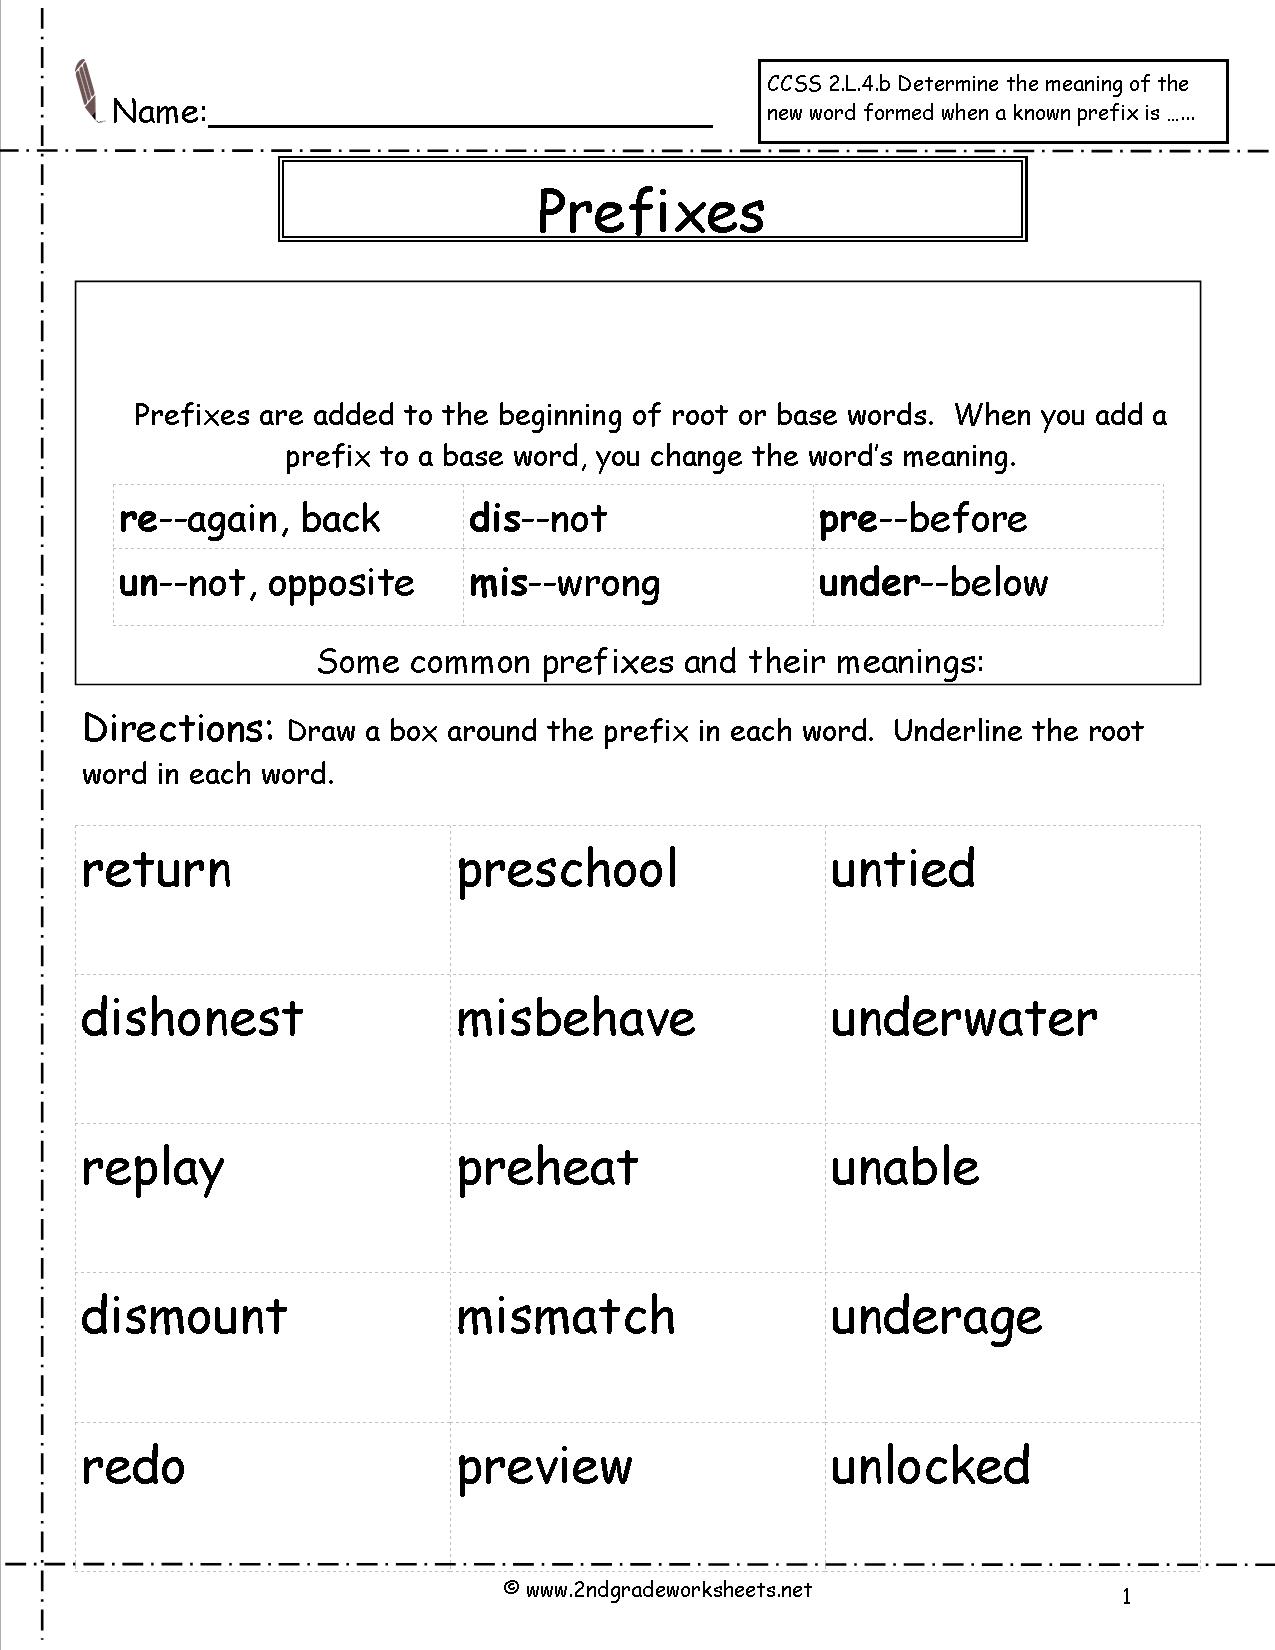 15-best-images-of-root-words-worksheets-root-words-prefixes-suffixes